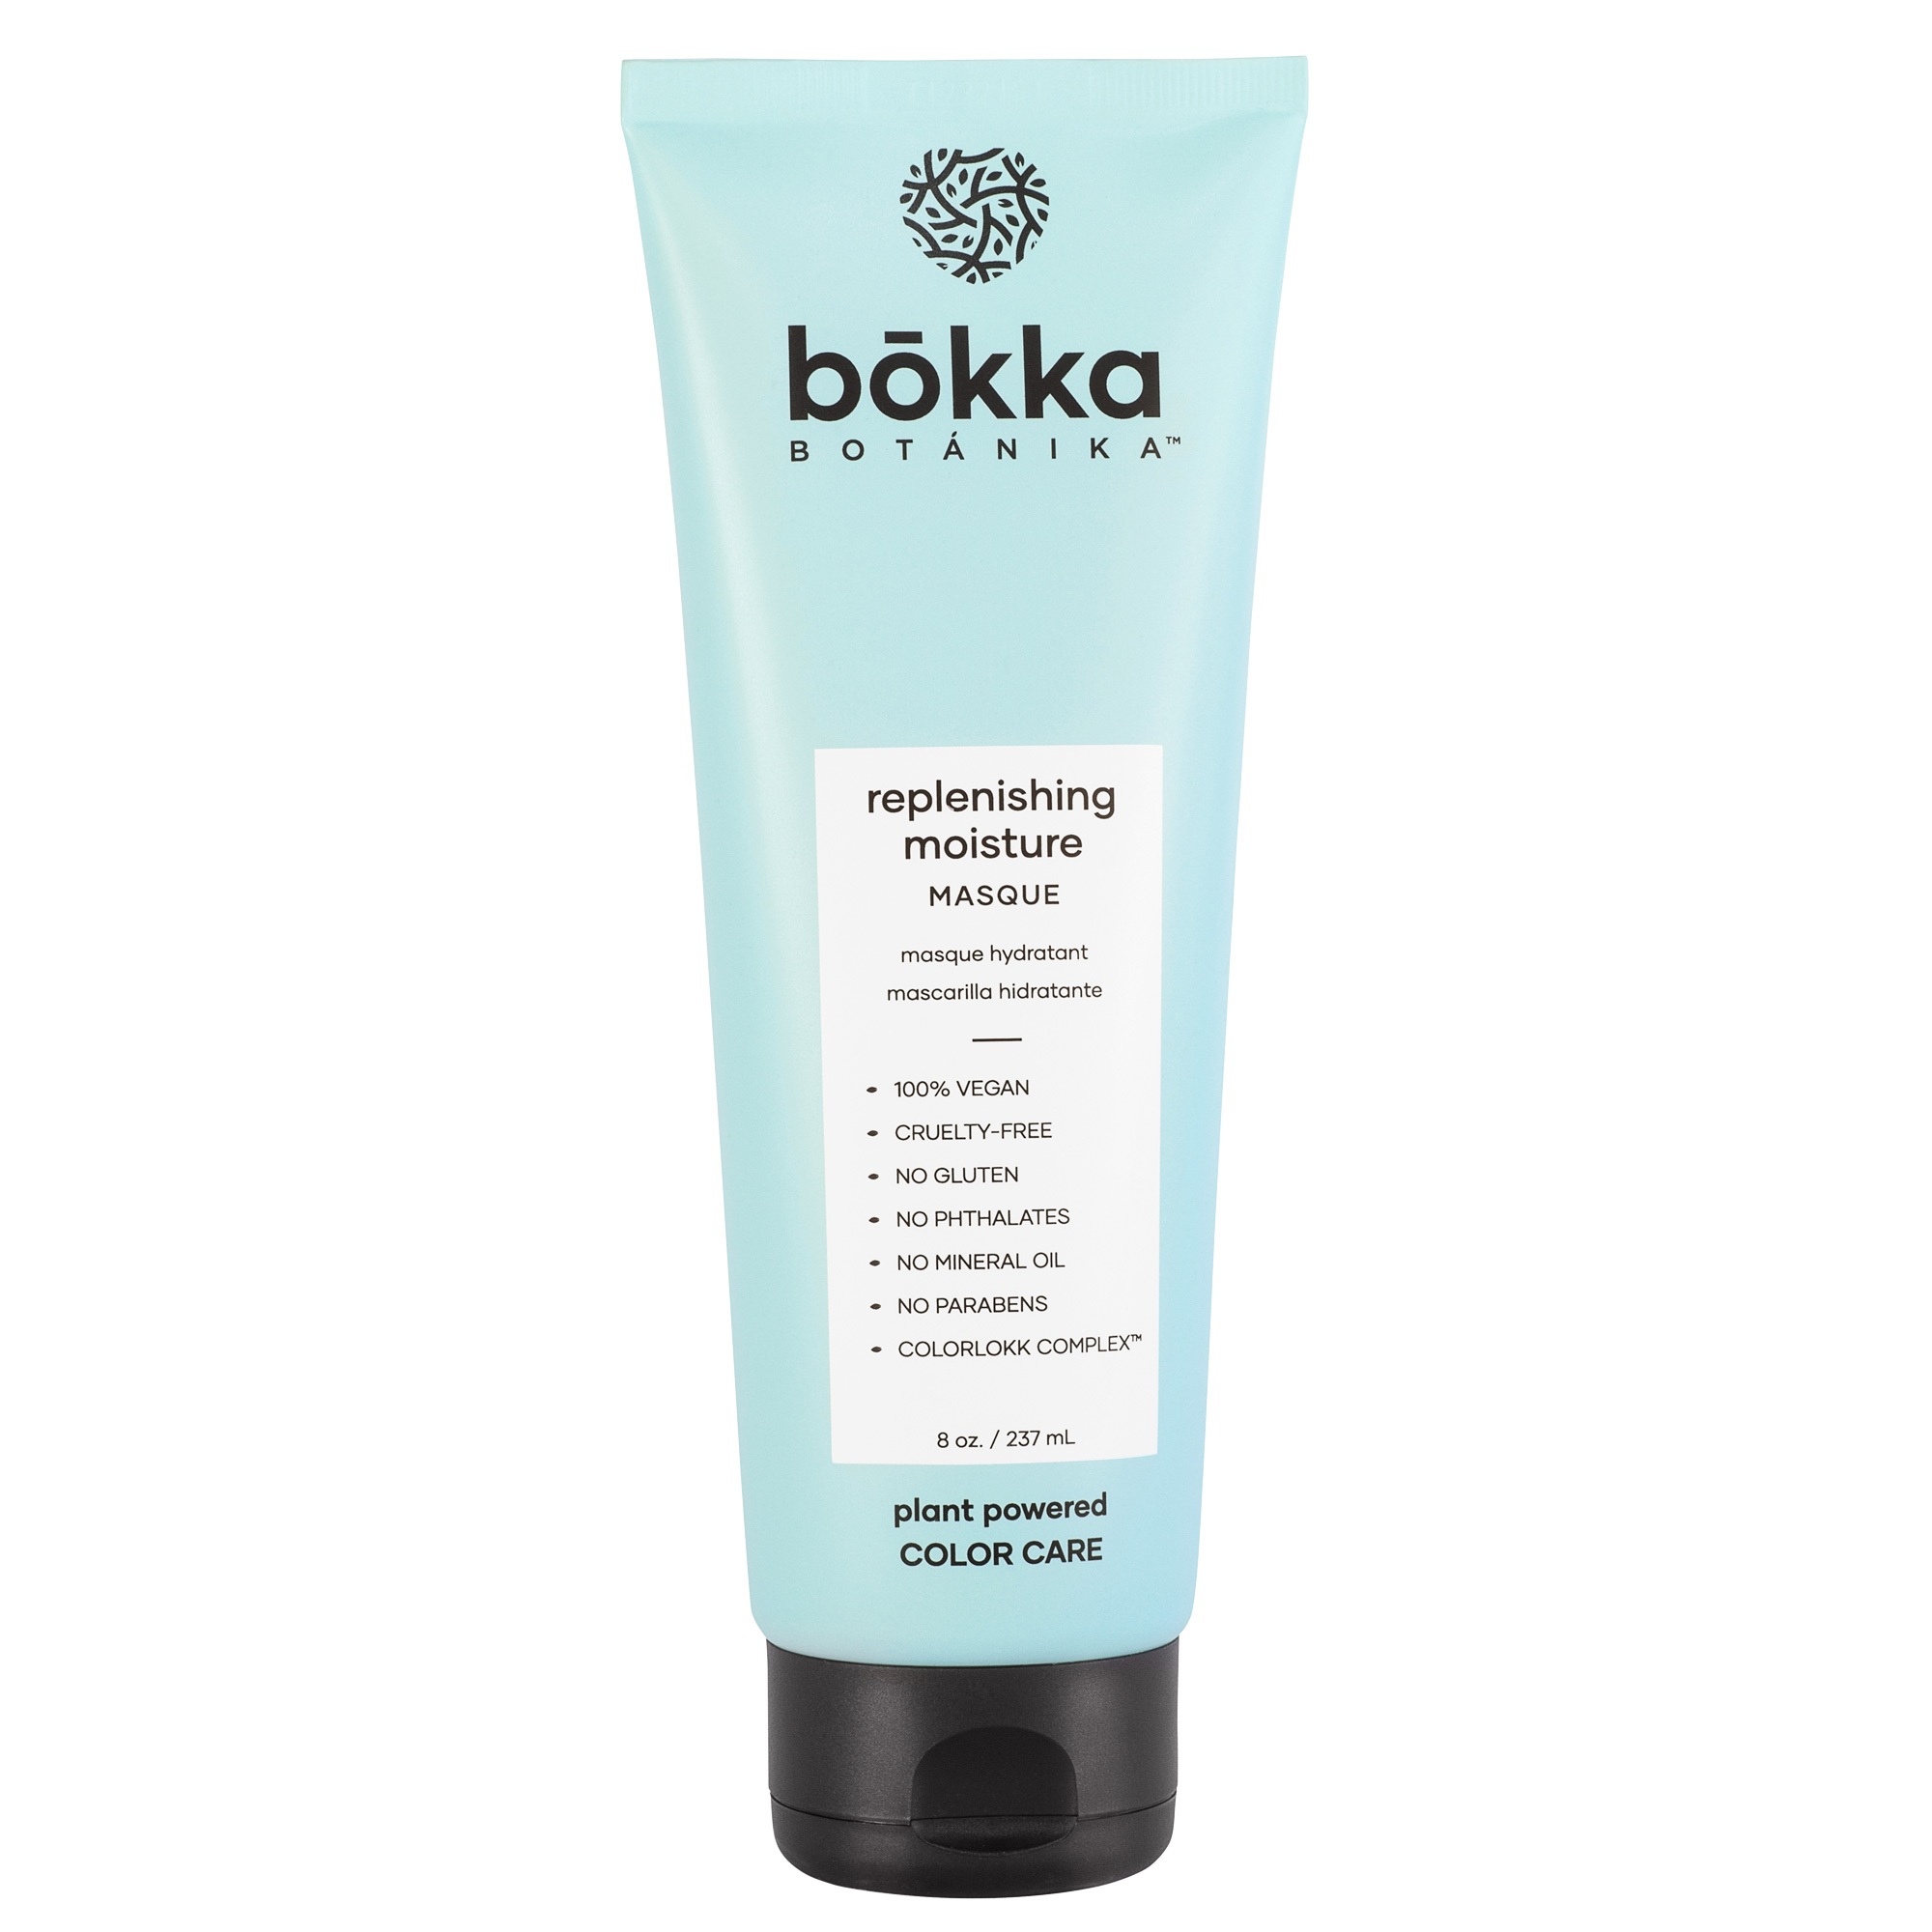 bokka BOTANICA Replenishing Moisture Masque 8oz